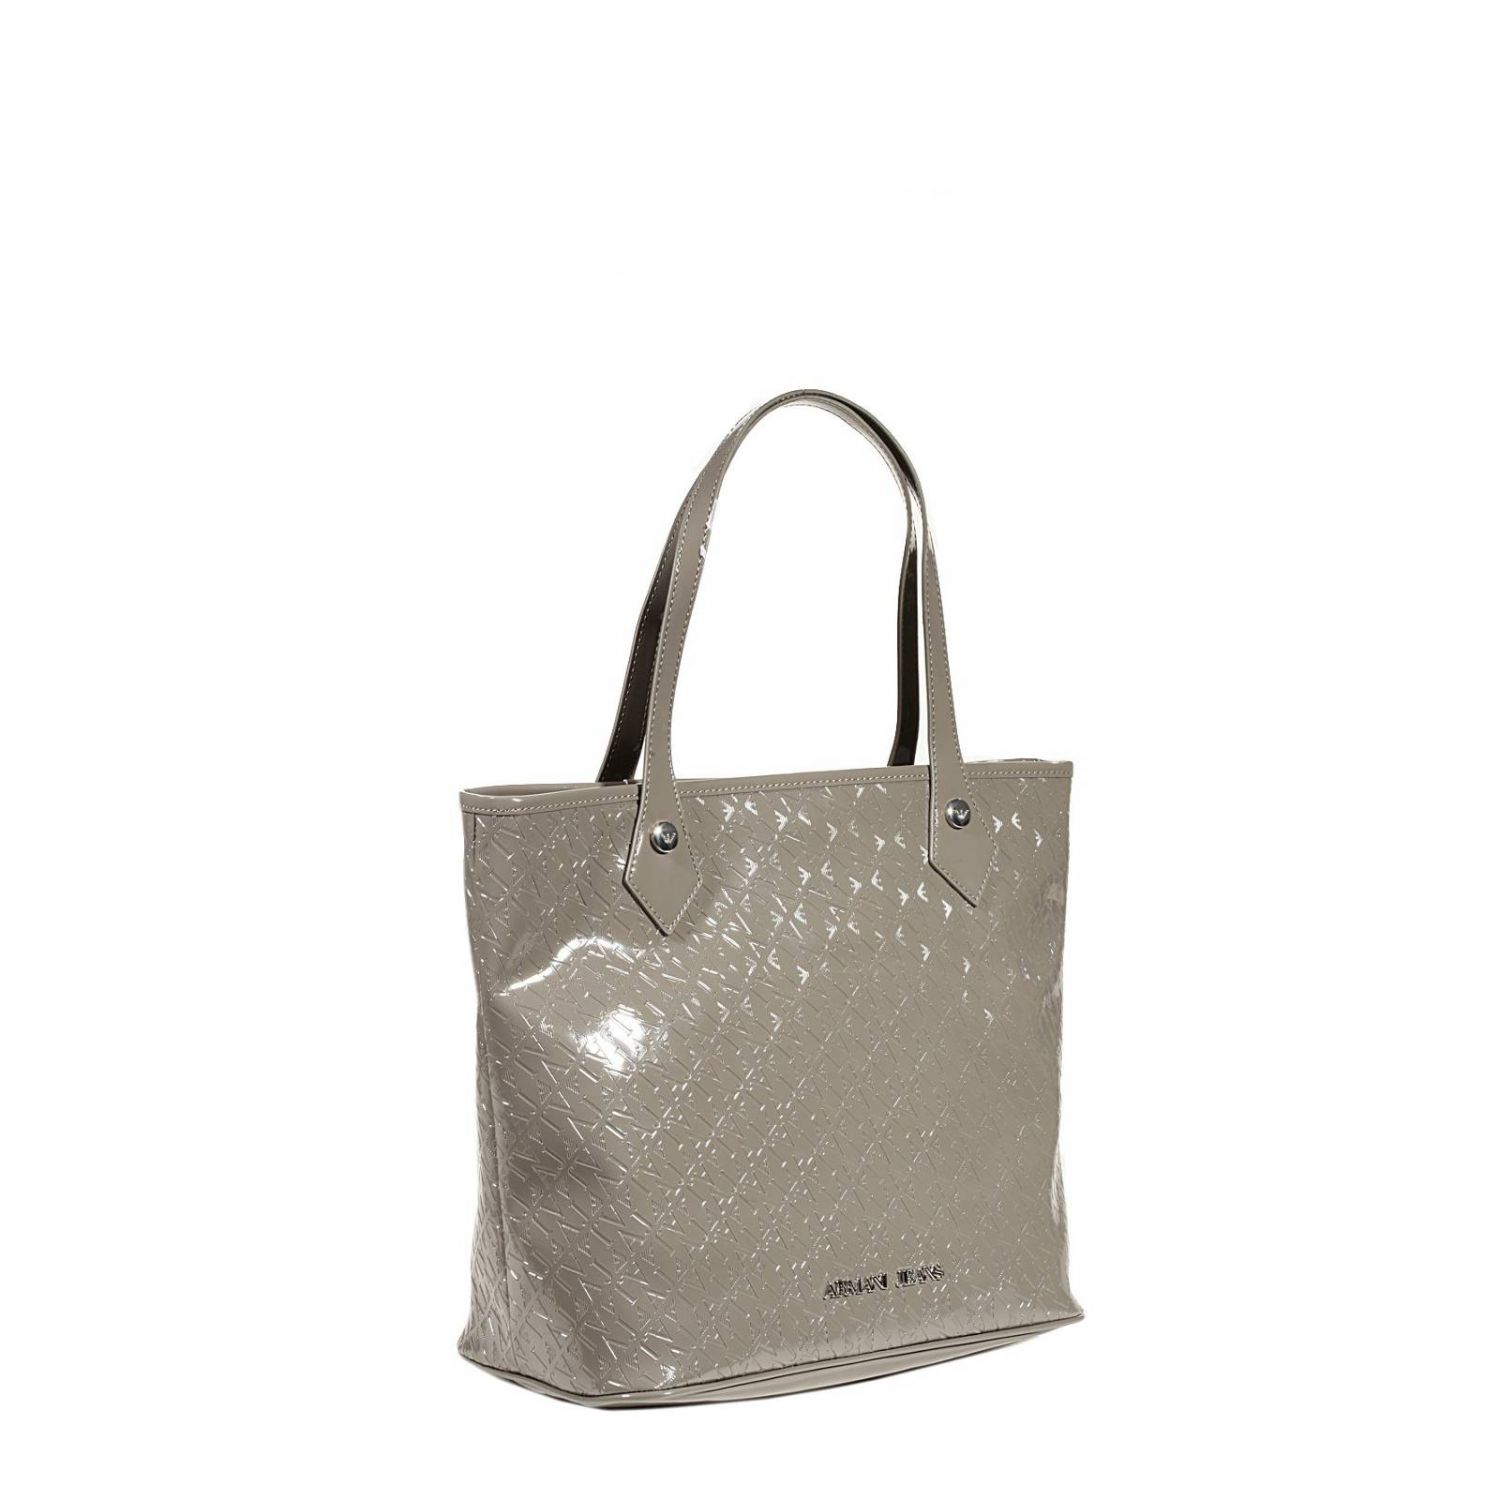 Armani Jeans Handbag Patent Leather Branded Medium Shopping Bag in Gray (Dove grey) | Lyst